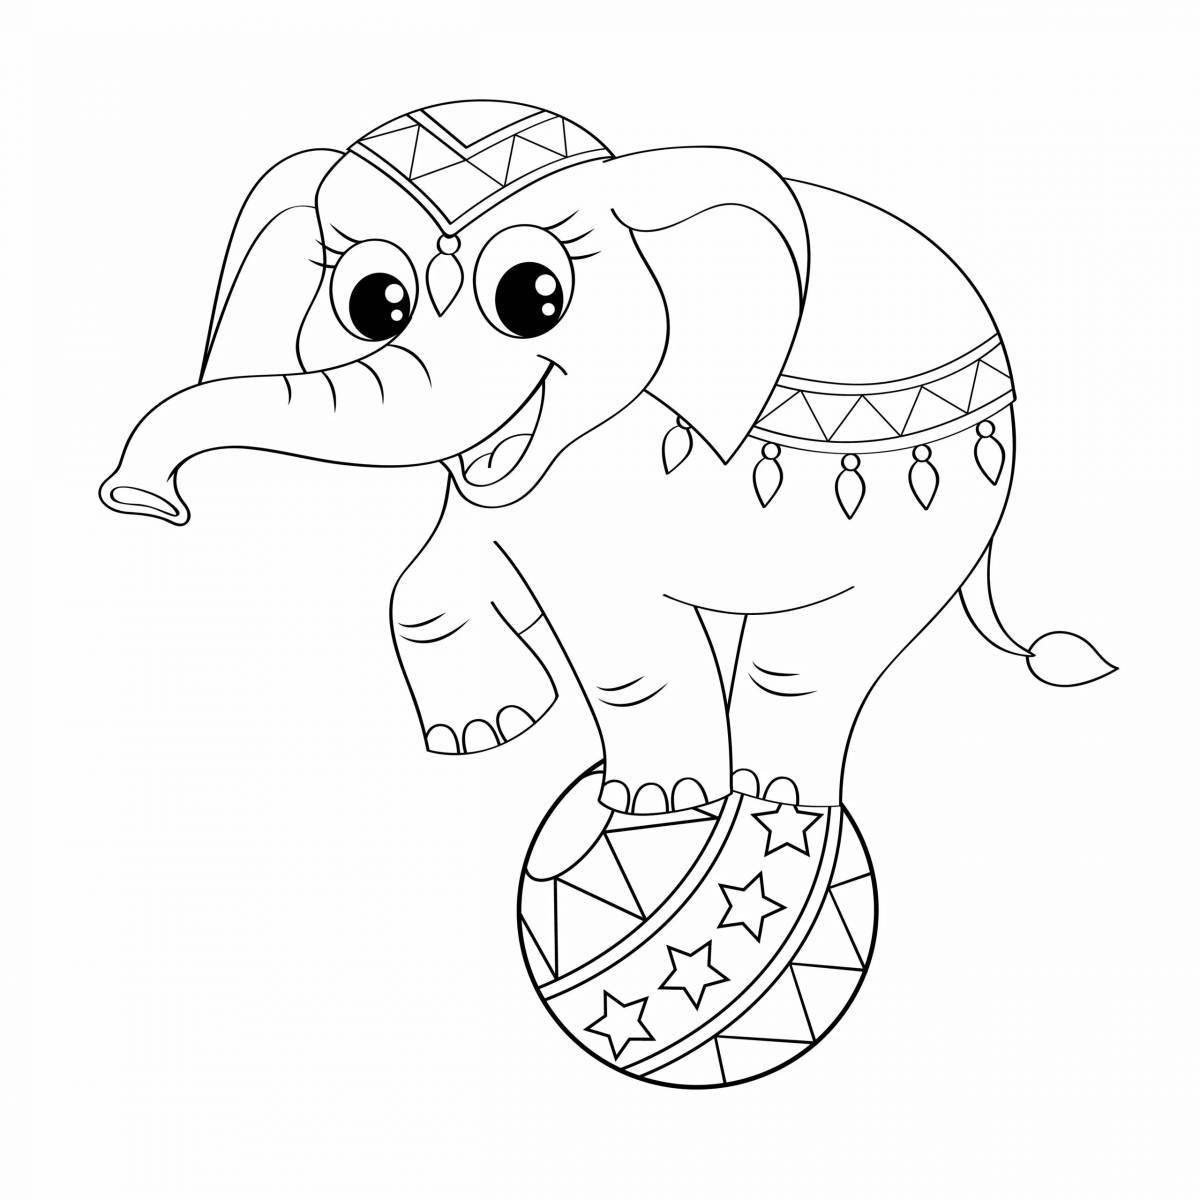 Coloring happy circus elephant